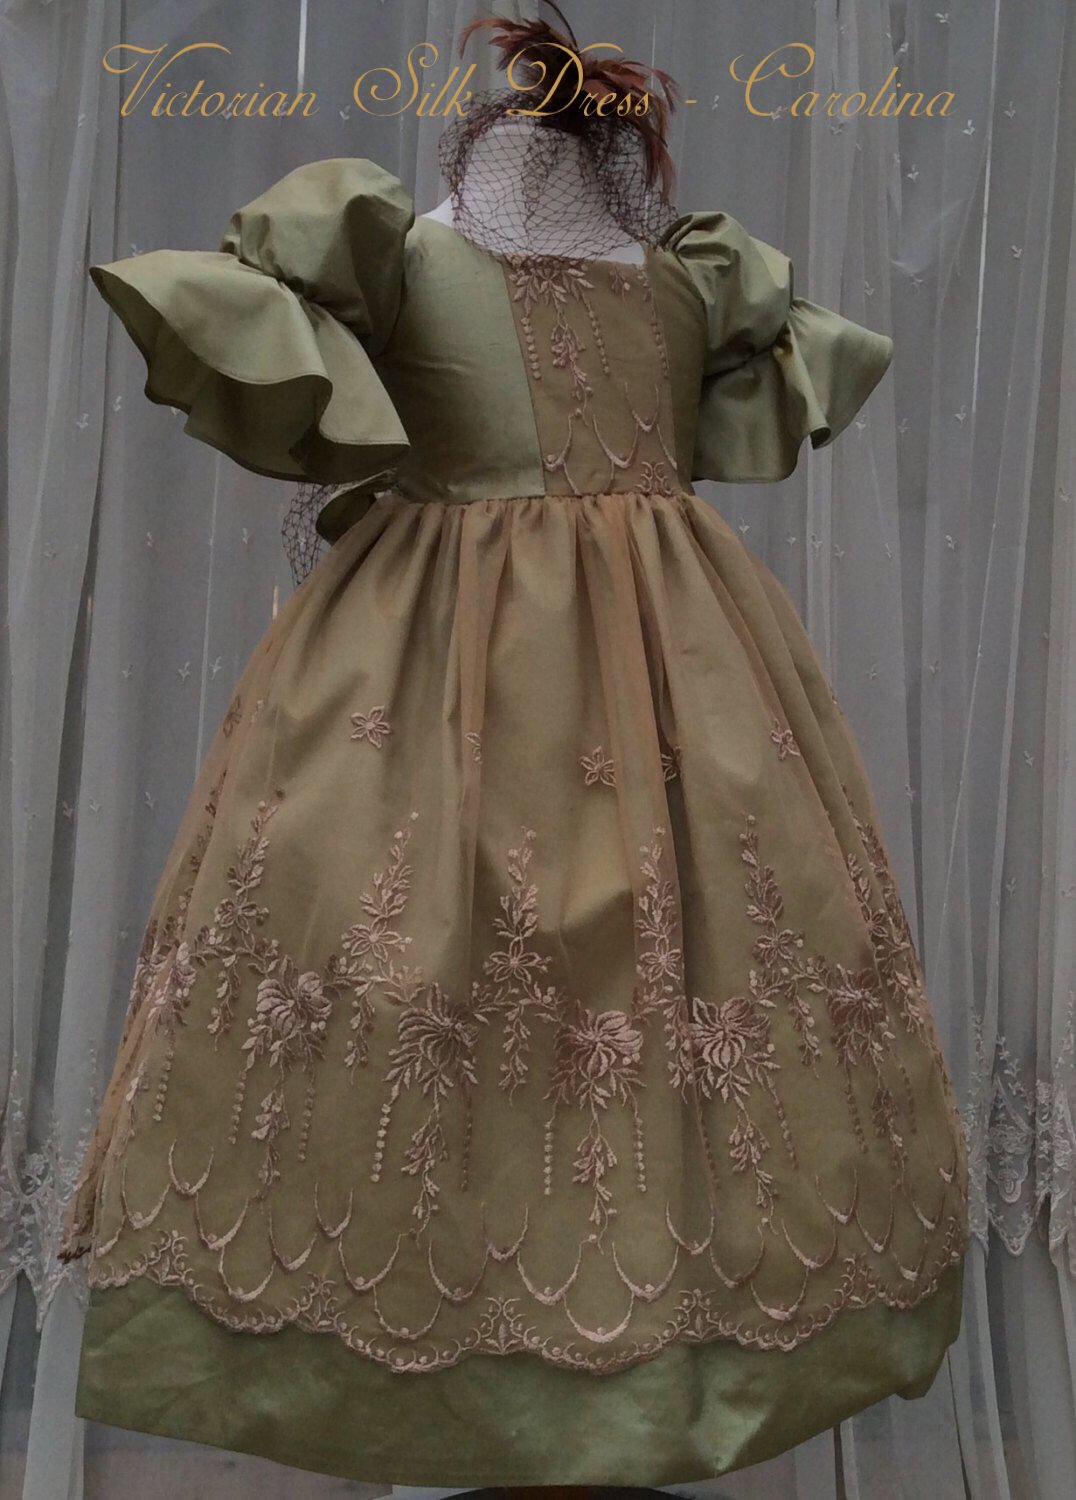 Victorian Flower Girl Dress - Carolina